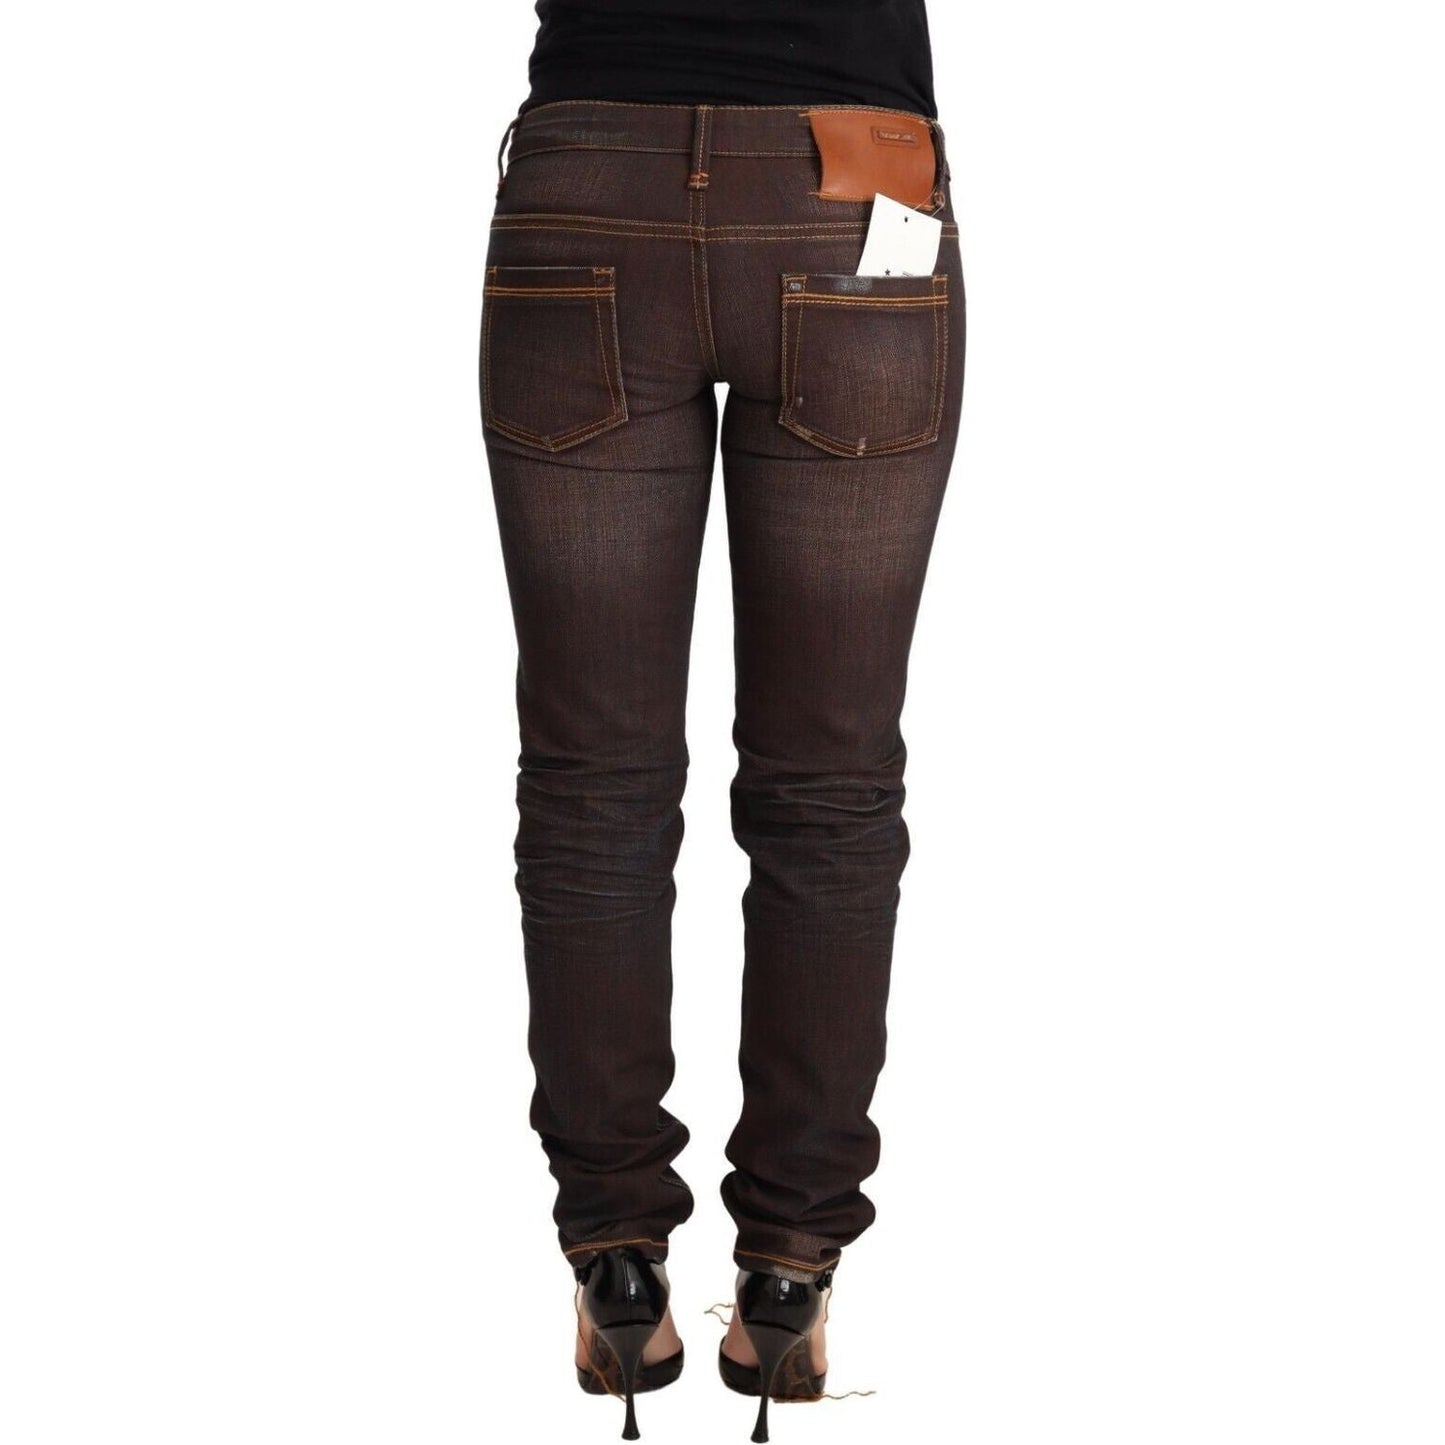 Acht Chic Low Waist Skinny Brown Jeans Jeans & Pants brown-washed-cotton-slim-fit-denim-low-waist-trouser-jeans s-l1600-1-110-9893265c-758.jpg